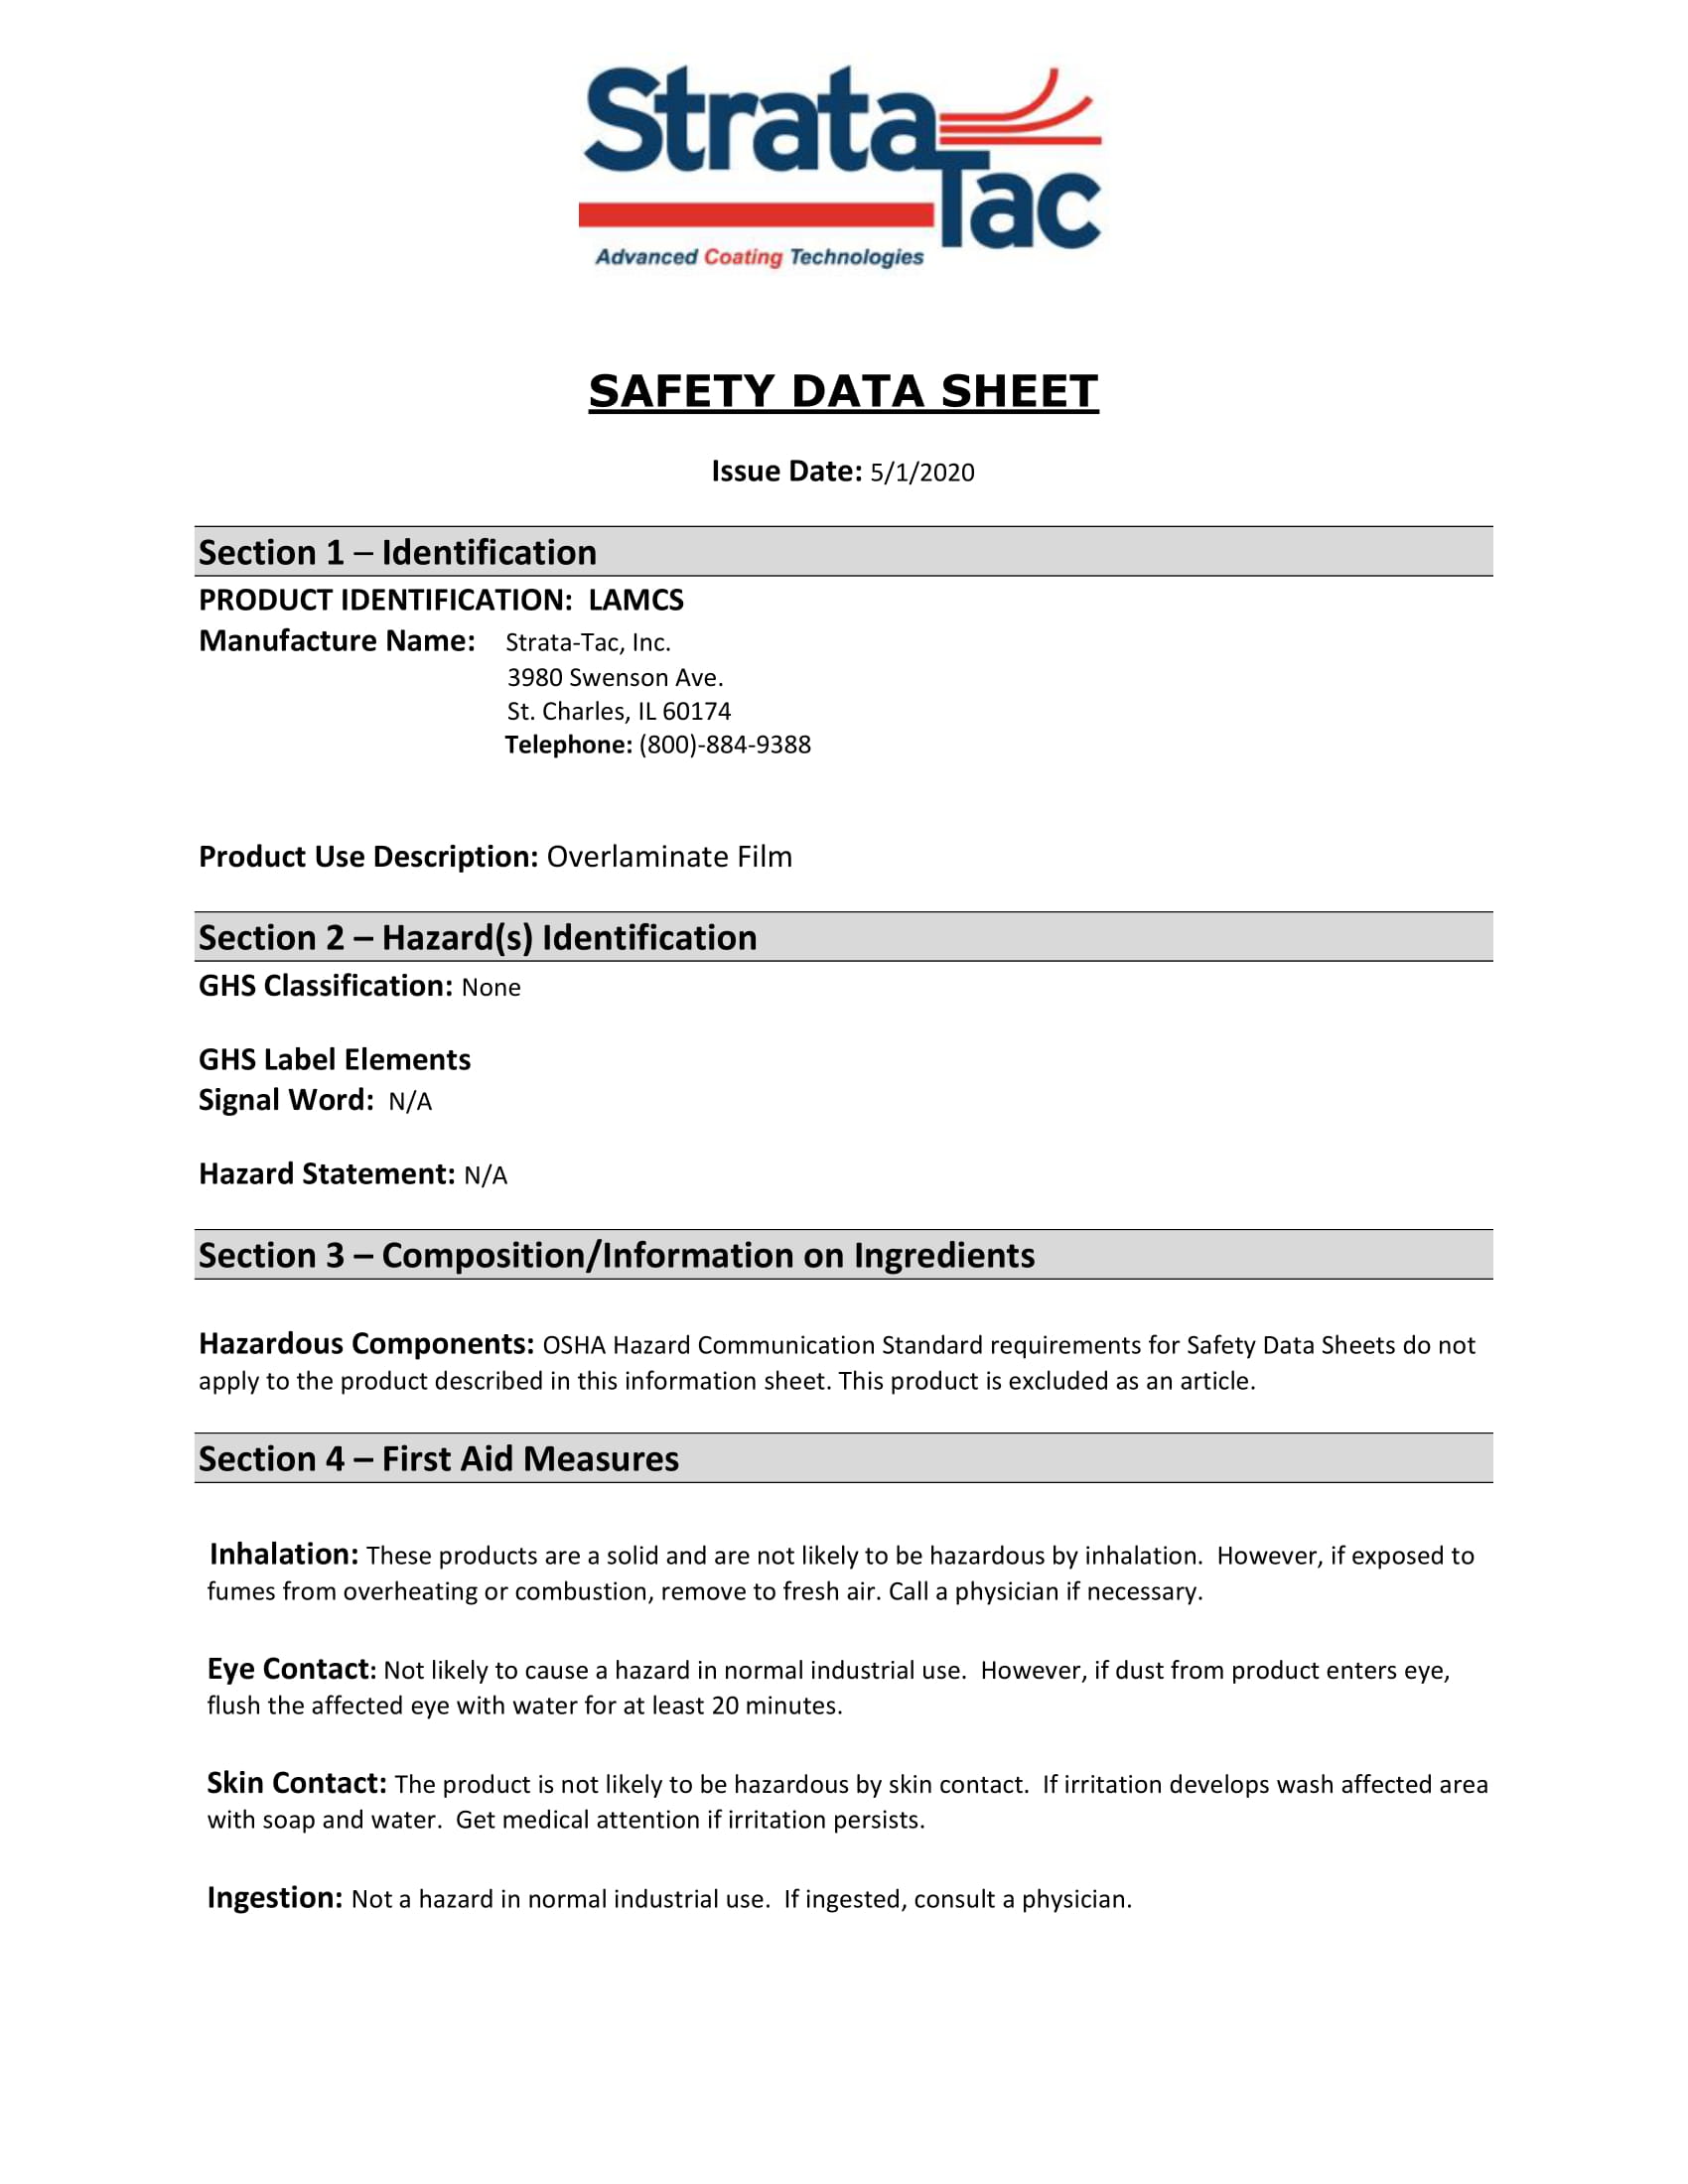 LAMS Safey Data Sheet